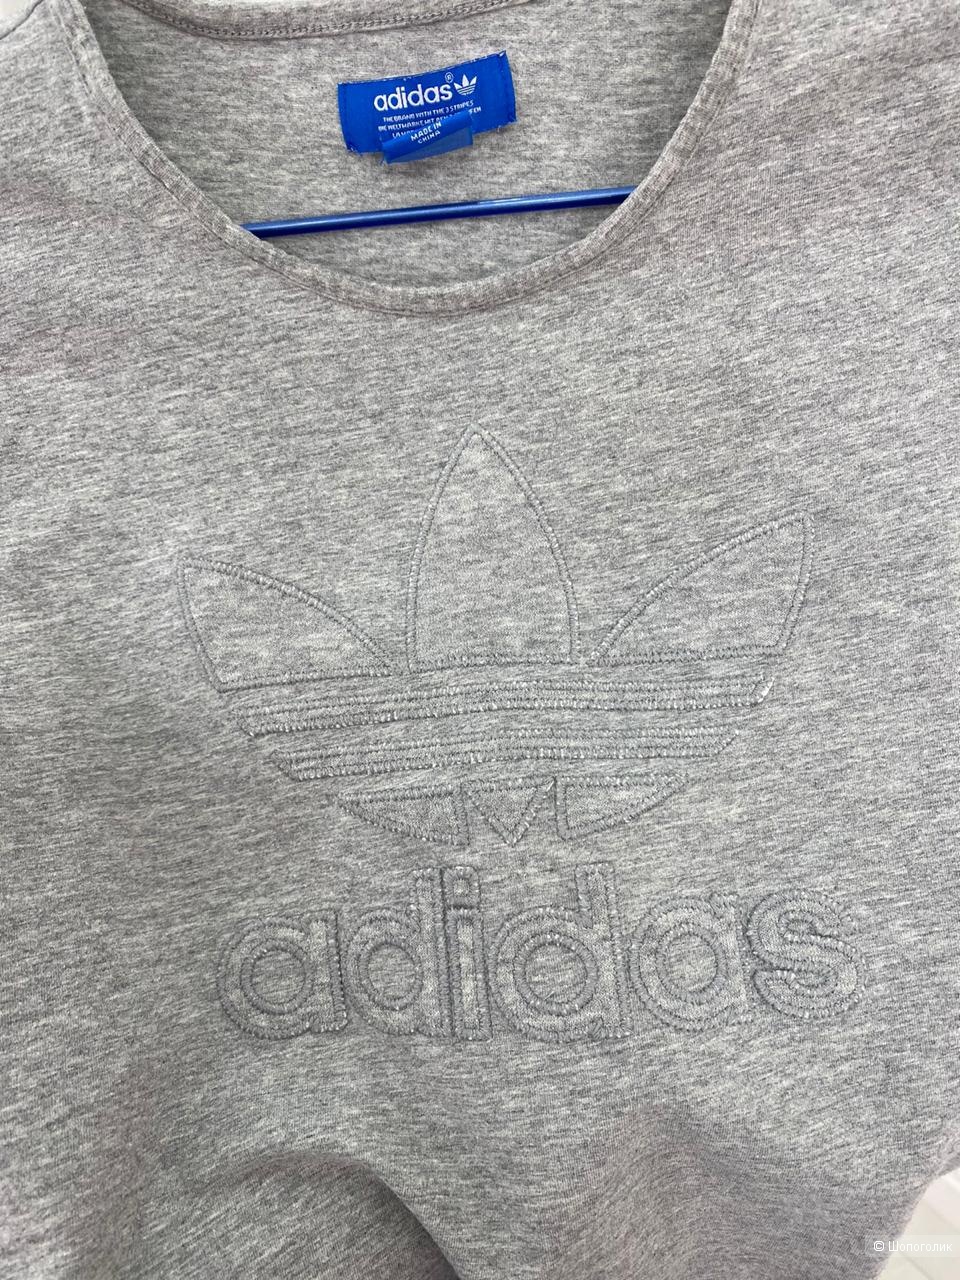 Футболка Adidas Original, размер s (42).